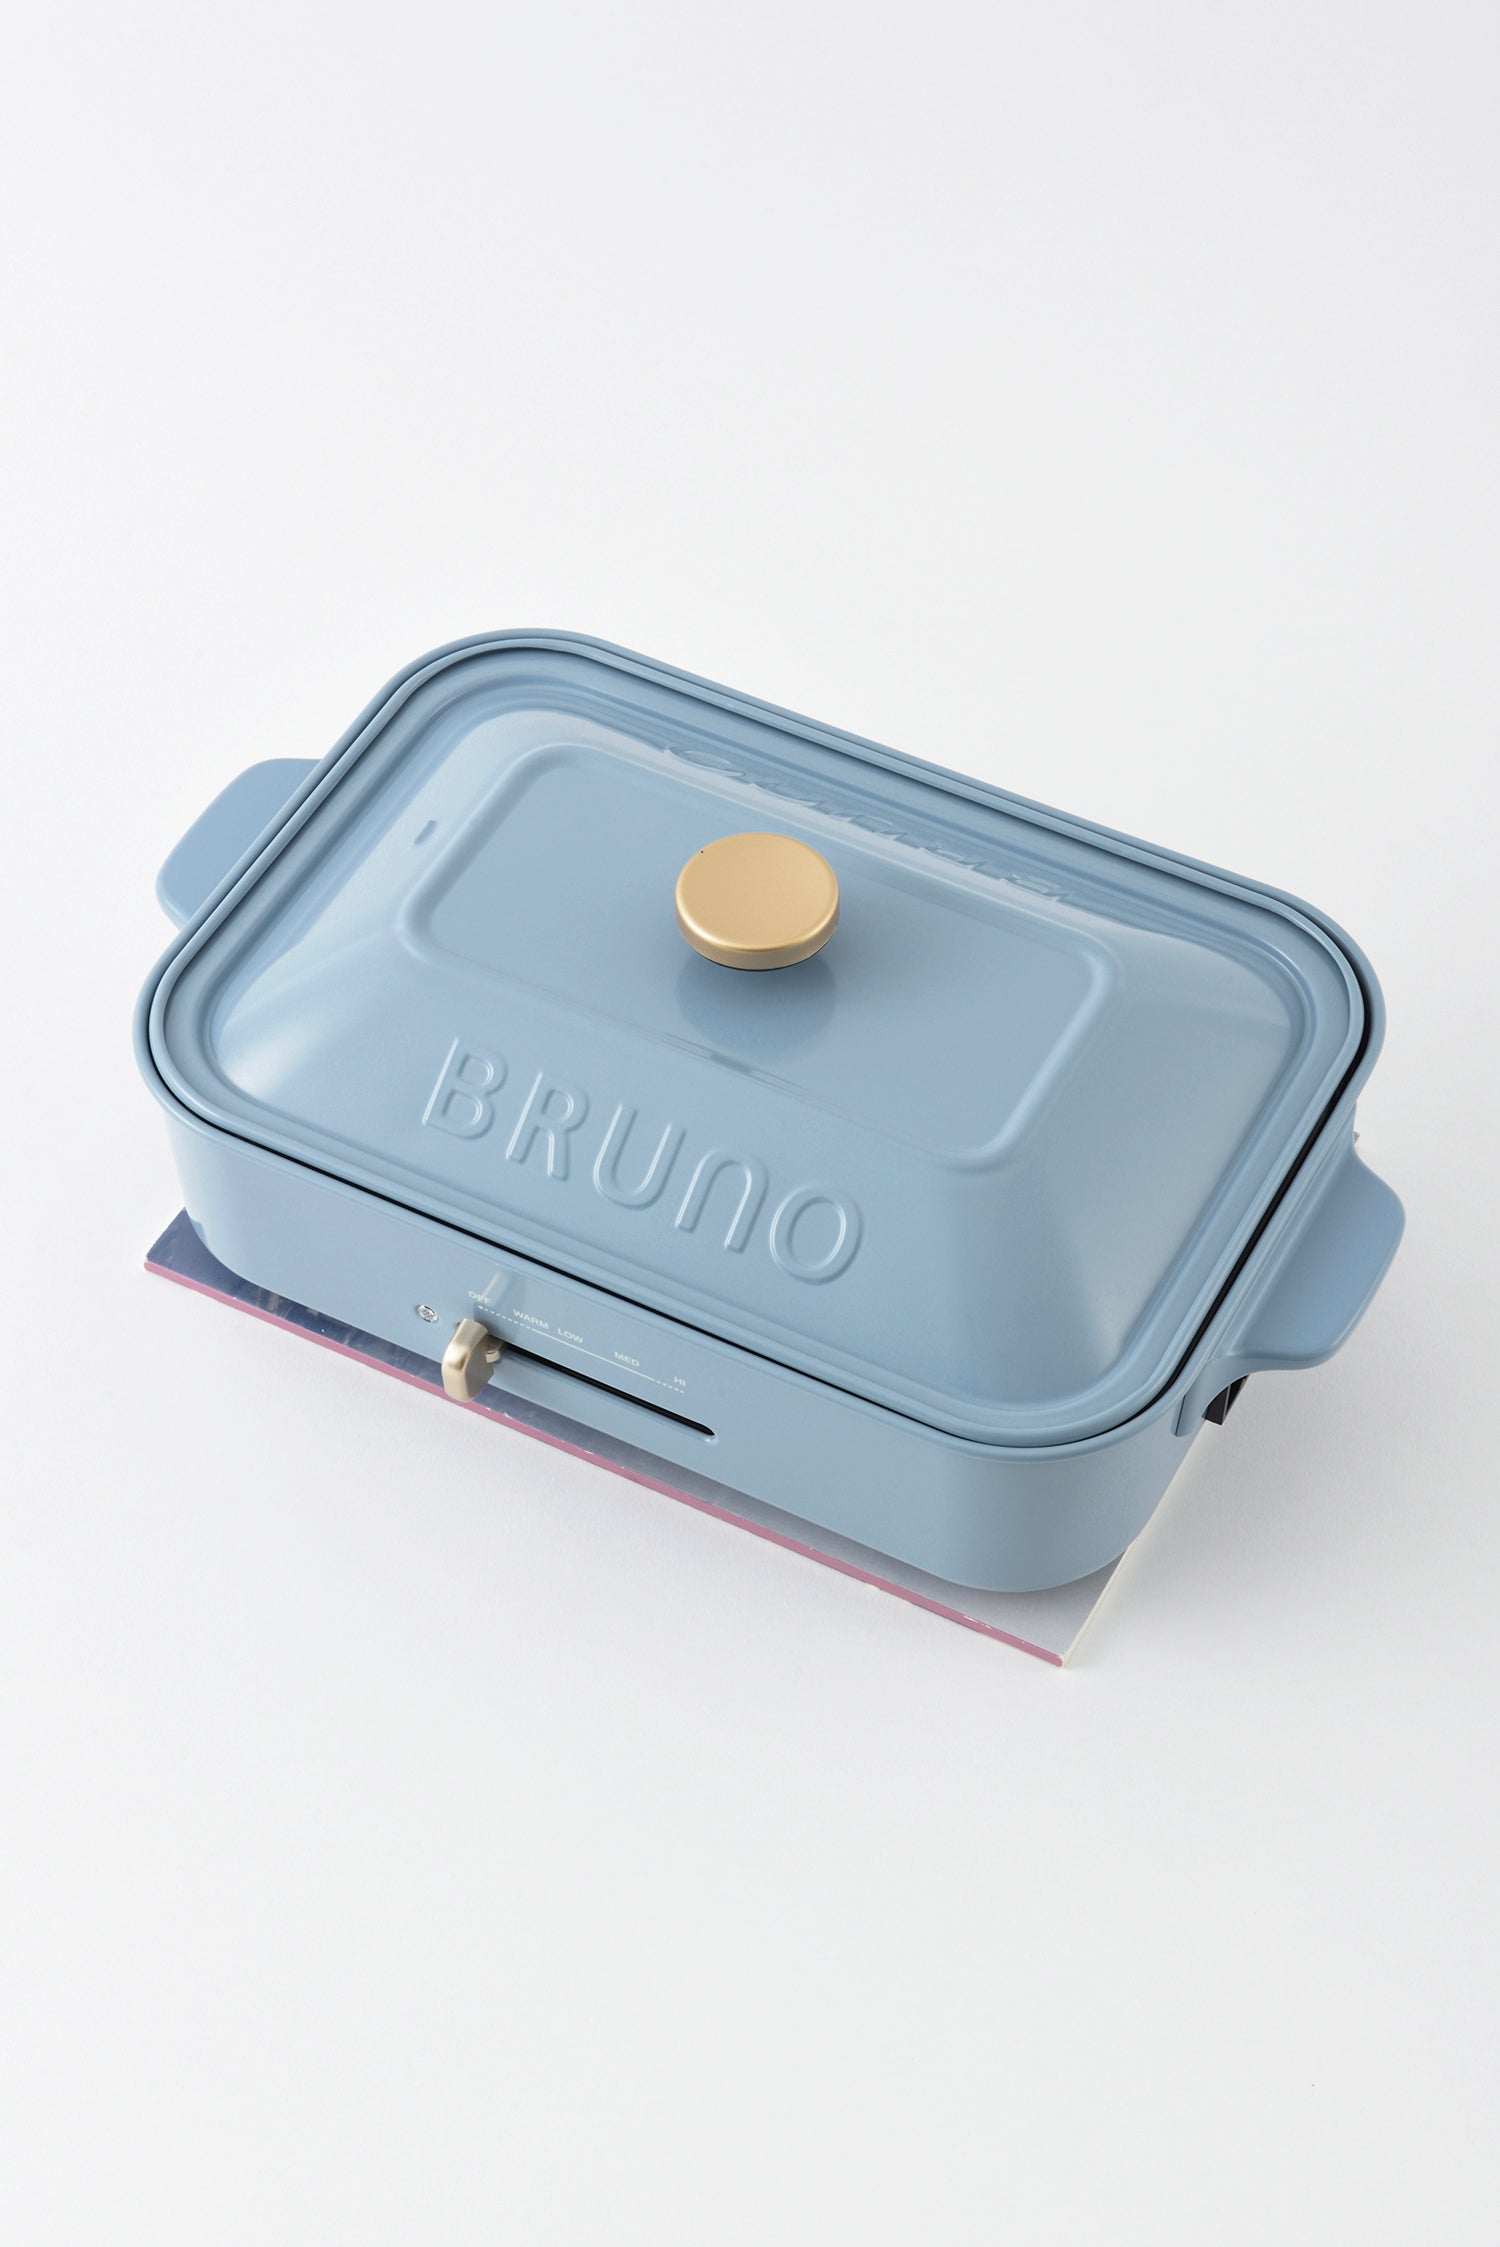 BRUNO 多功能電熱鍋 - 藍色 BOE021-POBL (預訂 4 月底到貨)